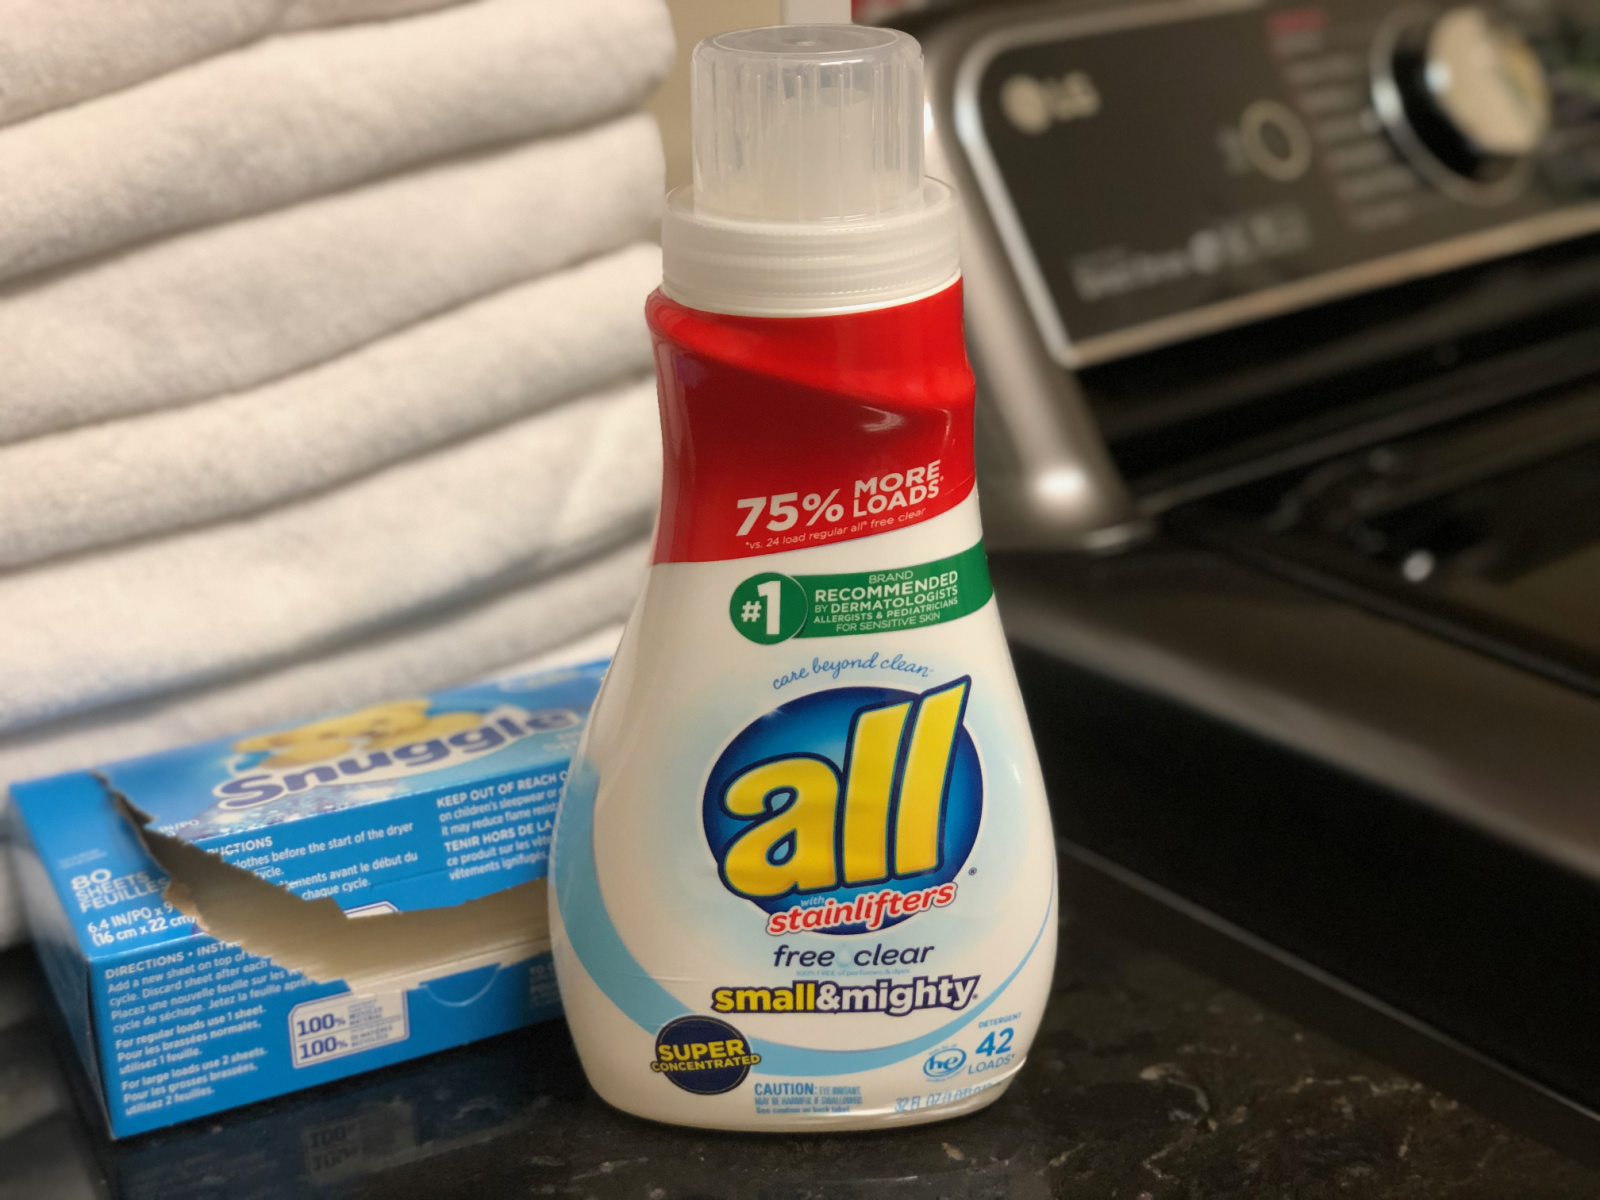 Get All Laundry Detergent As Low As 30¢ At Publix | LaptrinhX / News